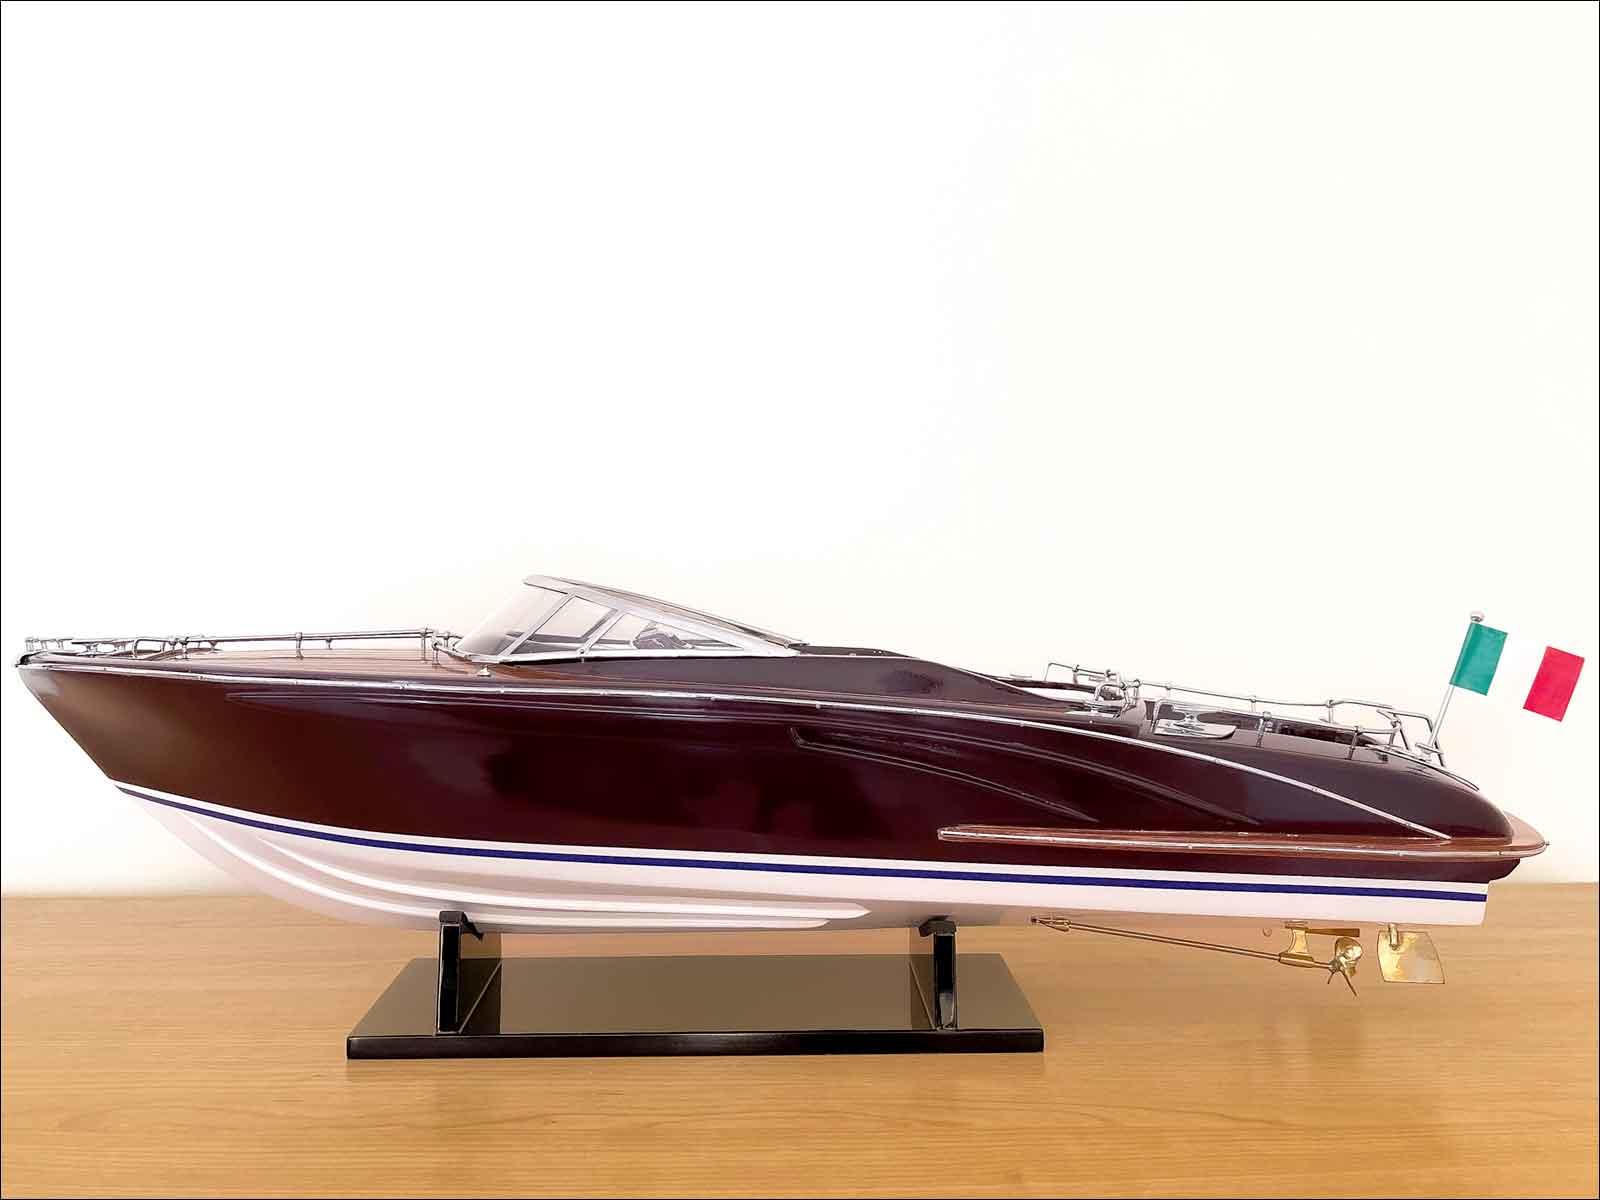 Rivarama 44 model boat with dark purple hull